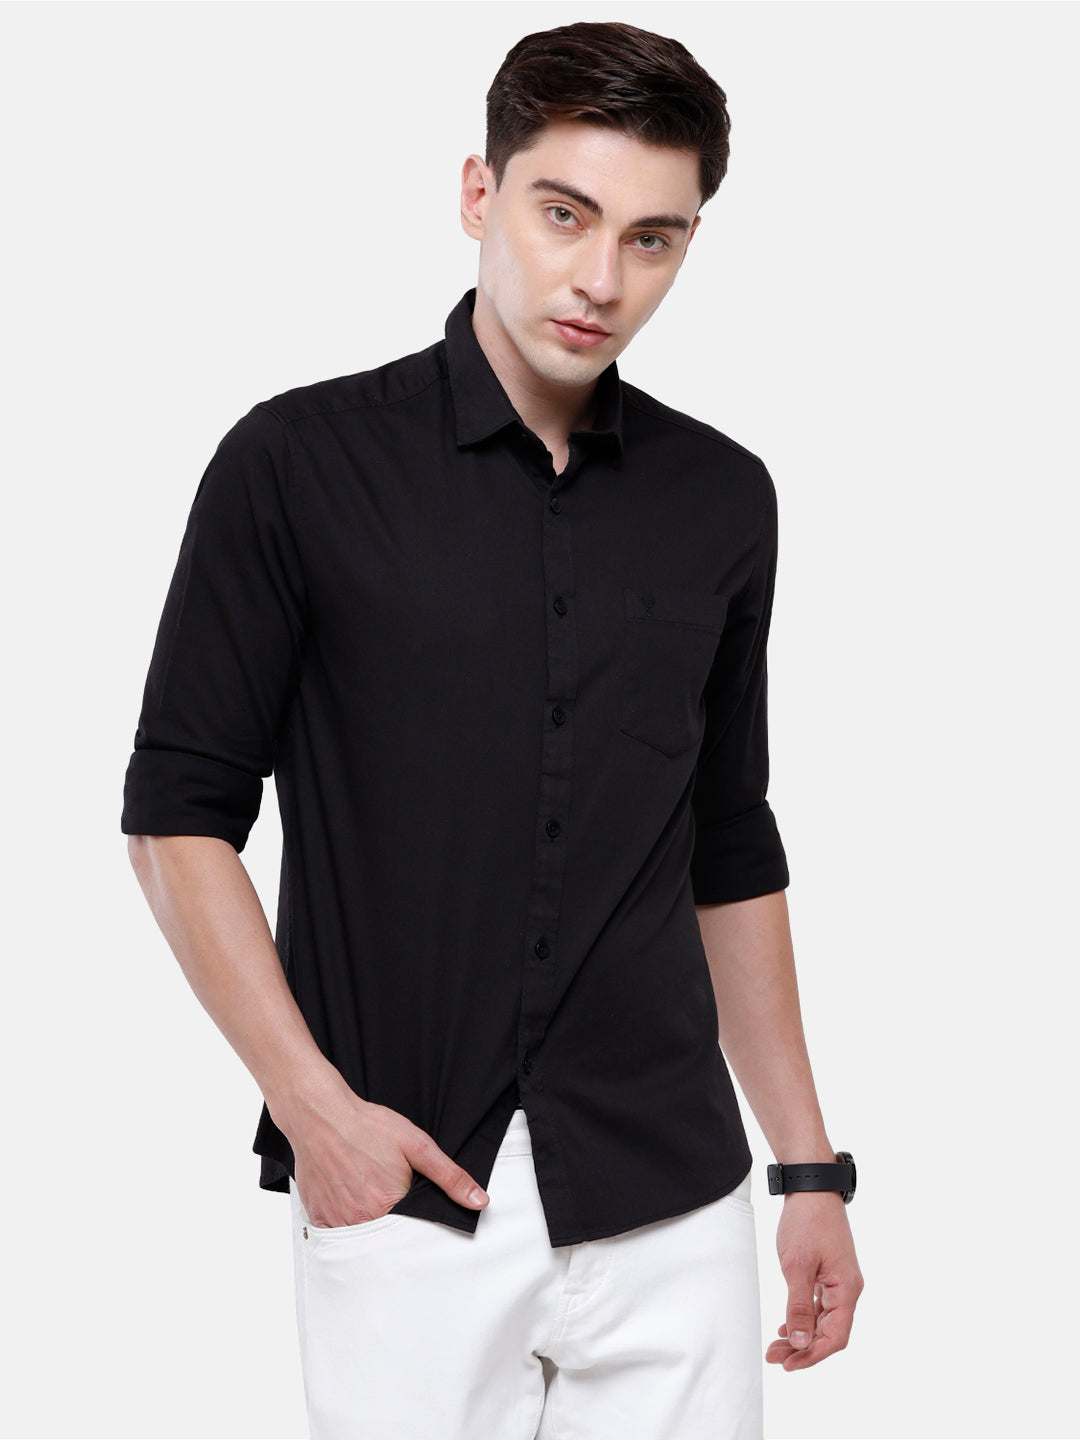 Classic Polo Men's Cotton Light Black Solid Full Sleeve Shirt - Zeus ...